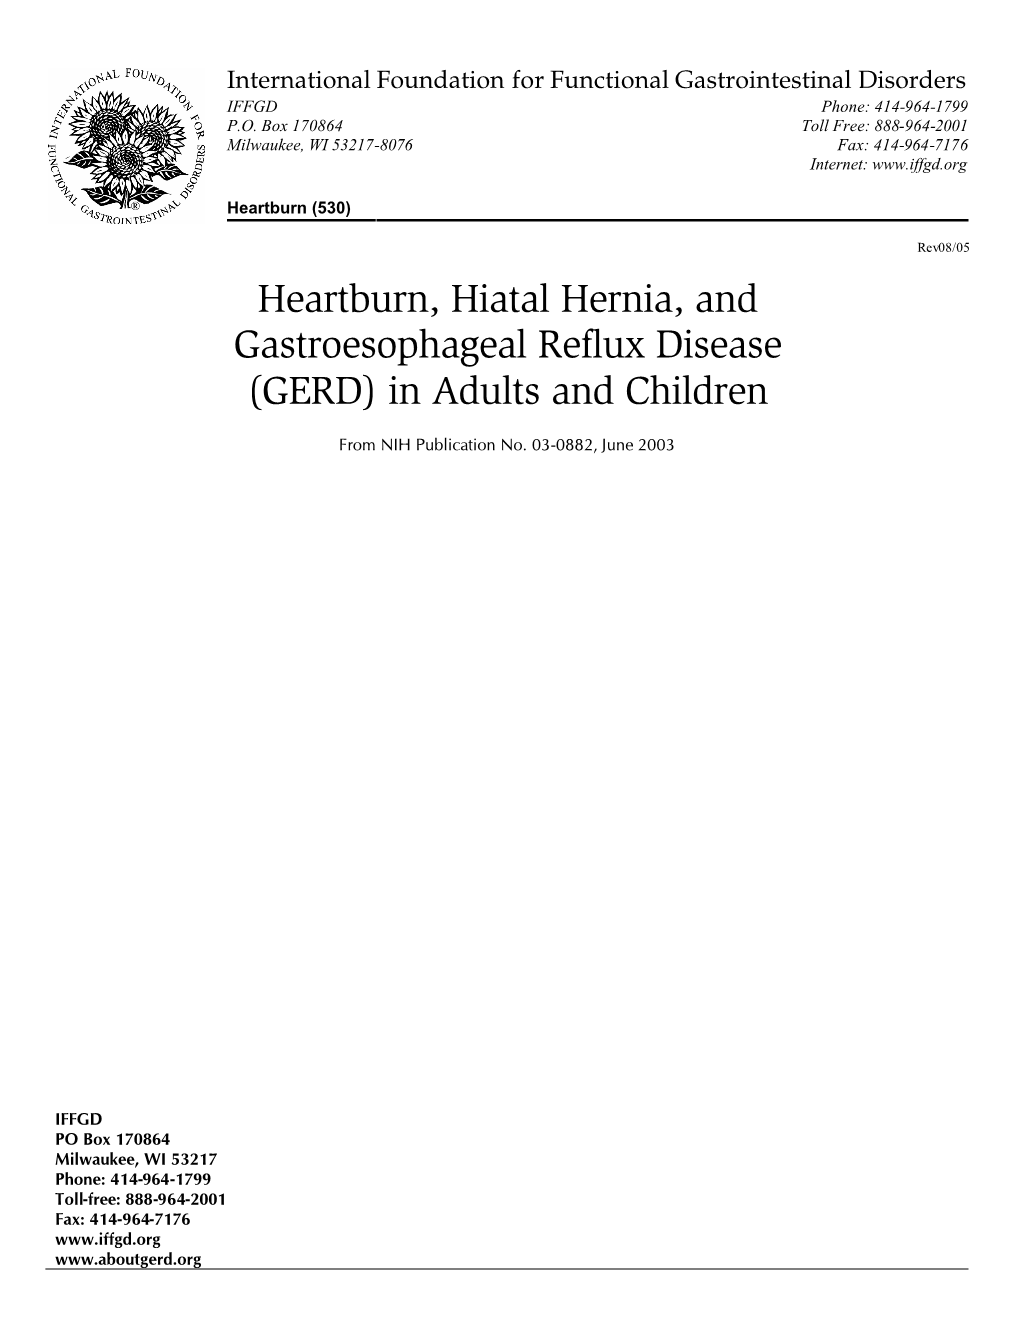 Heartburn, Hiatal Hernia, and Gastroesophageal Reflux Disease (GERD) in Adults and Children